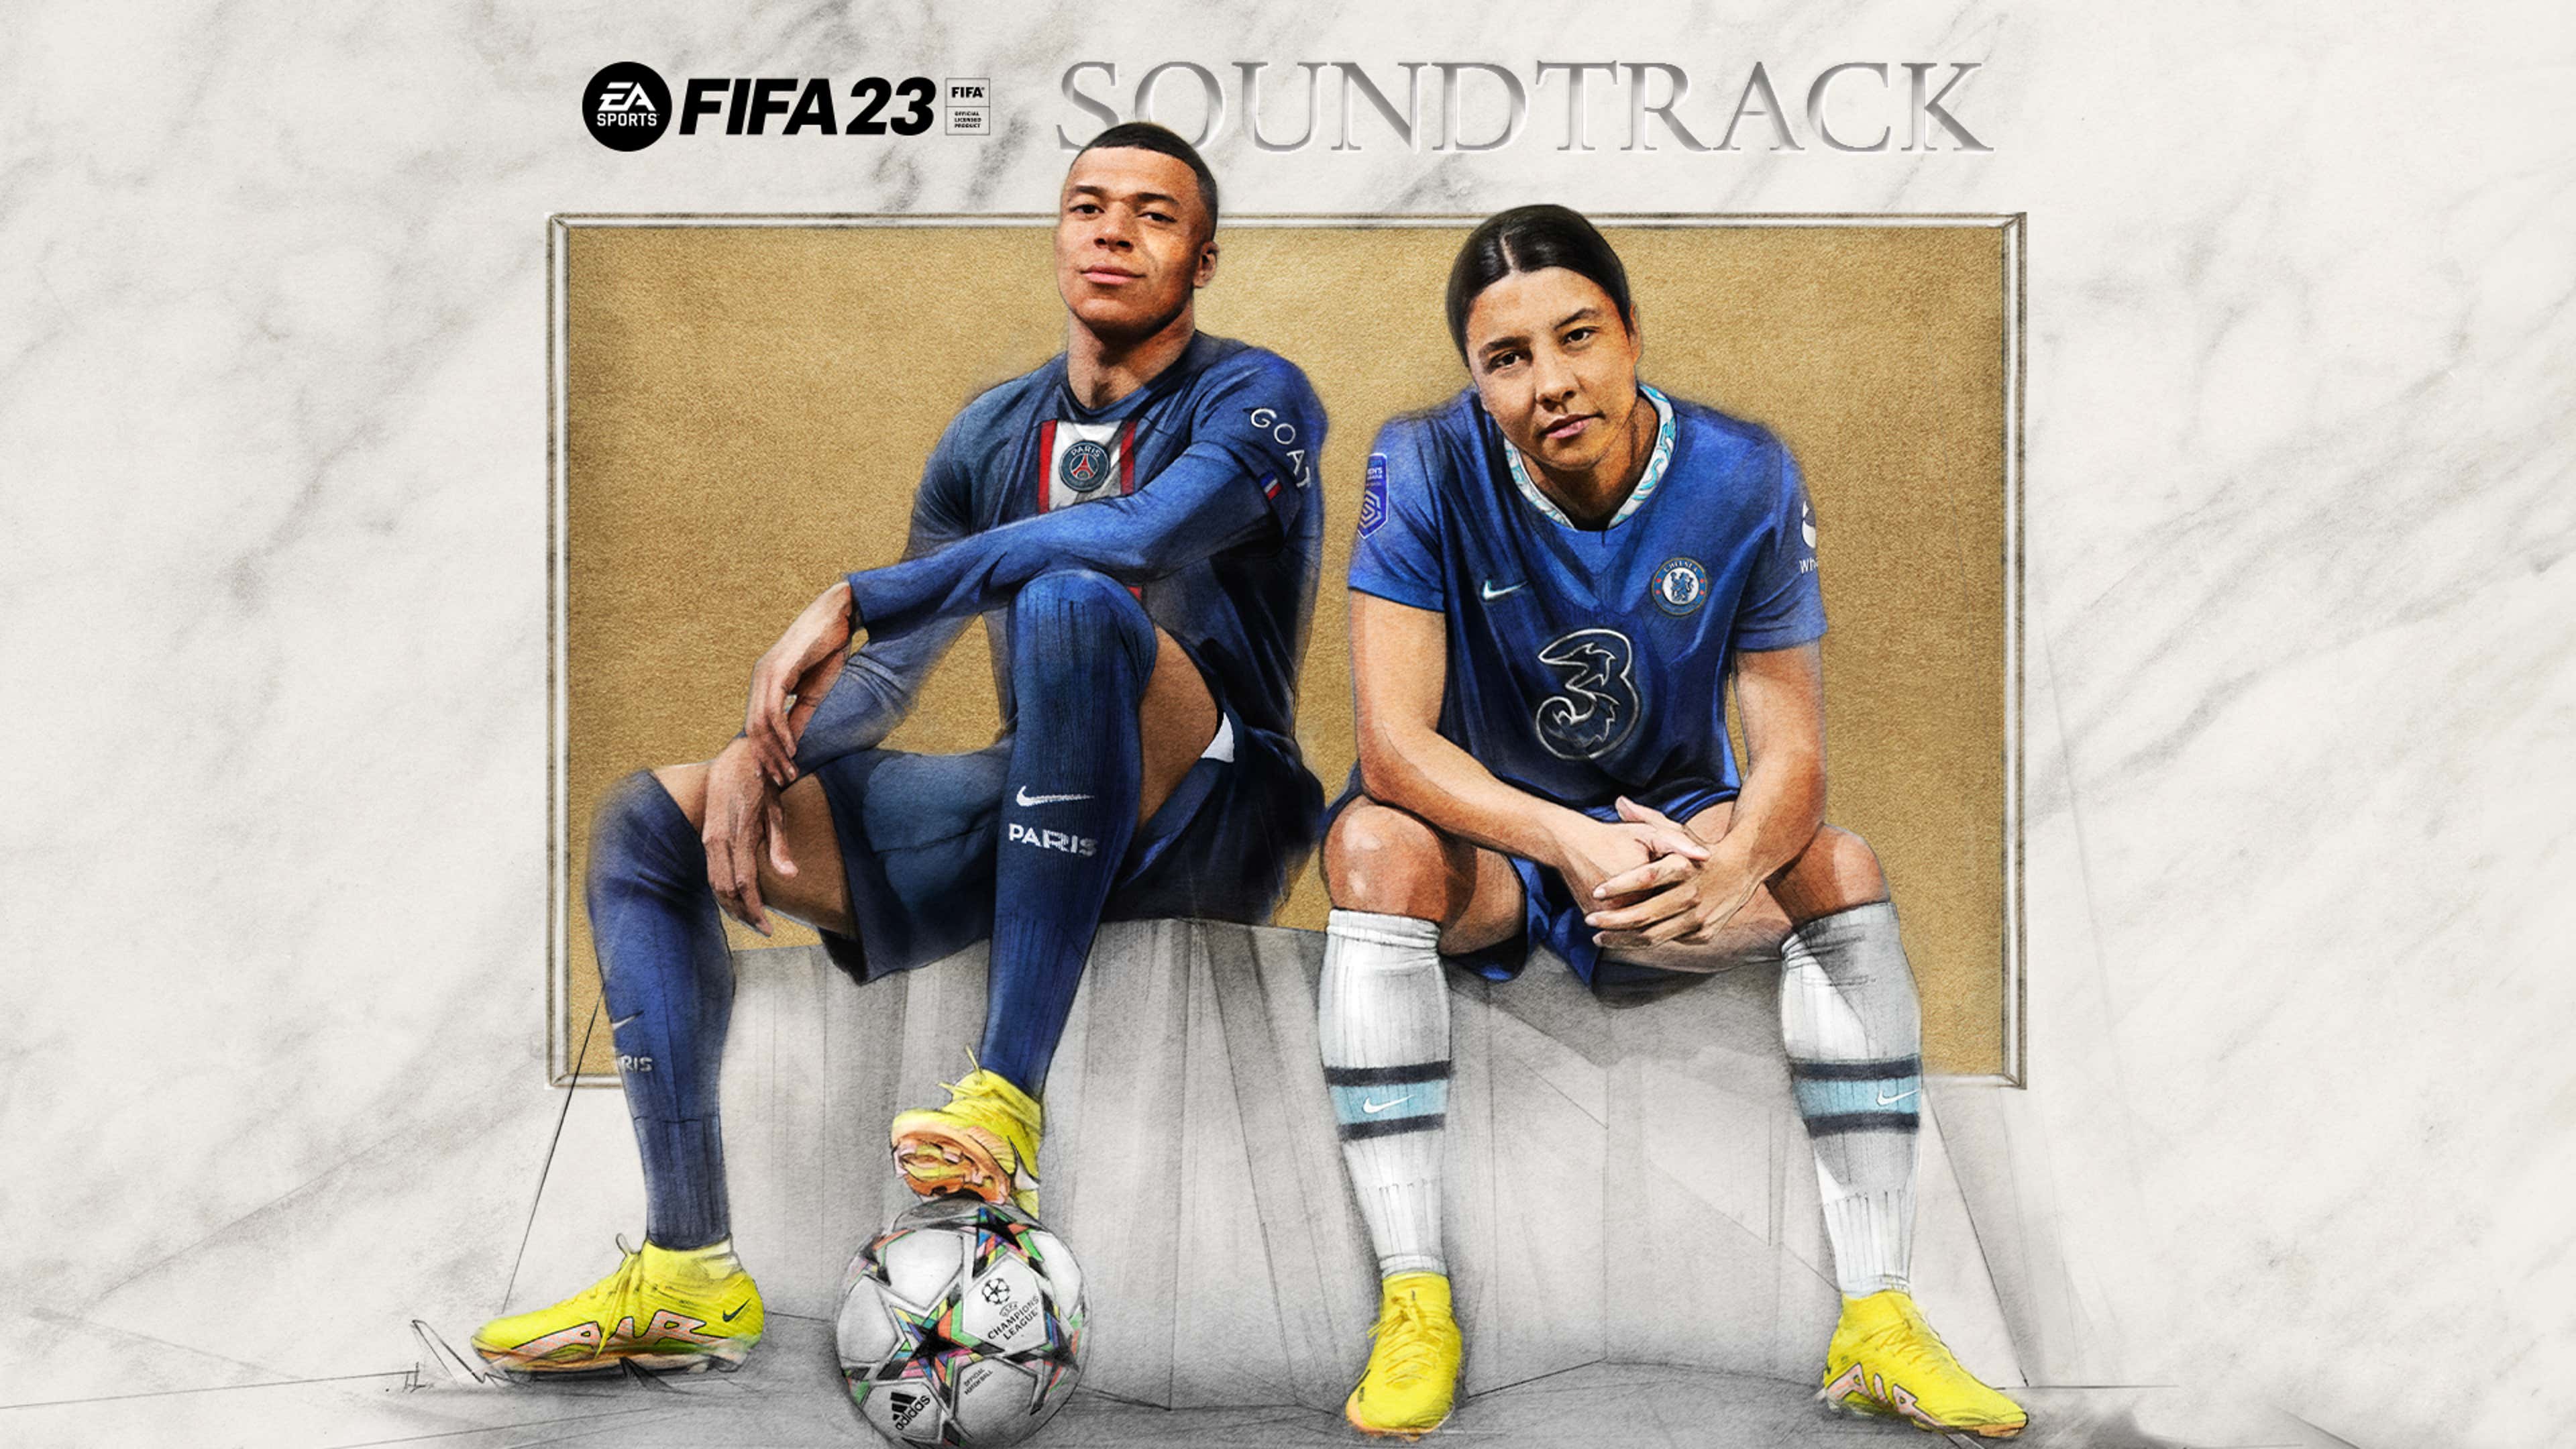 Badshah Main Der Xx Video - FIFA 23 soundtrack: Artists, songs & music on new game revealed | Goal.com  United Arab Emirates